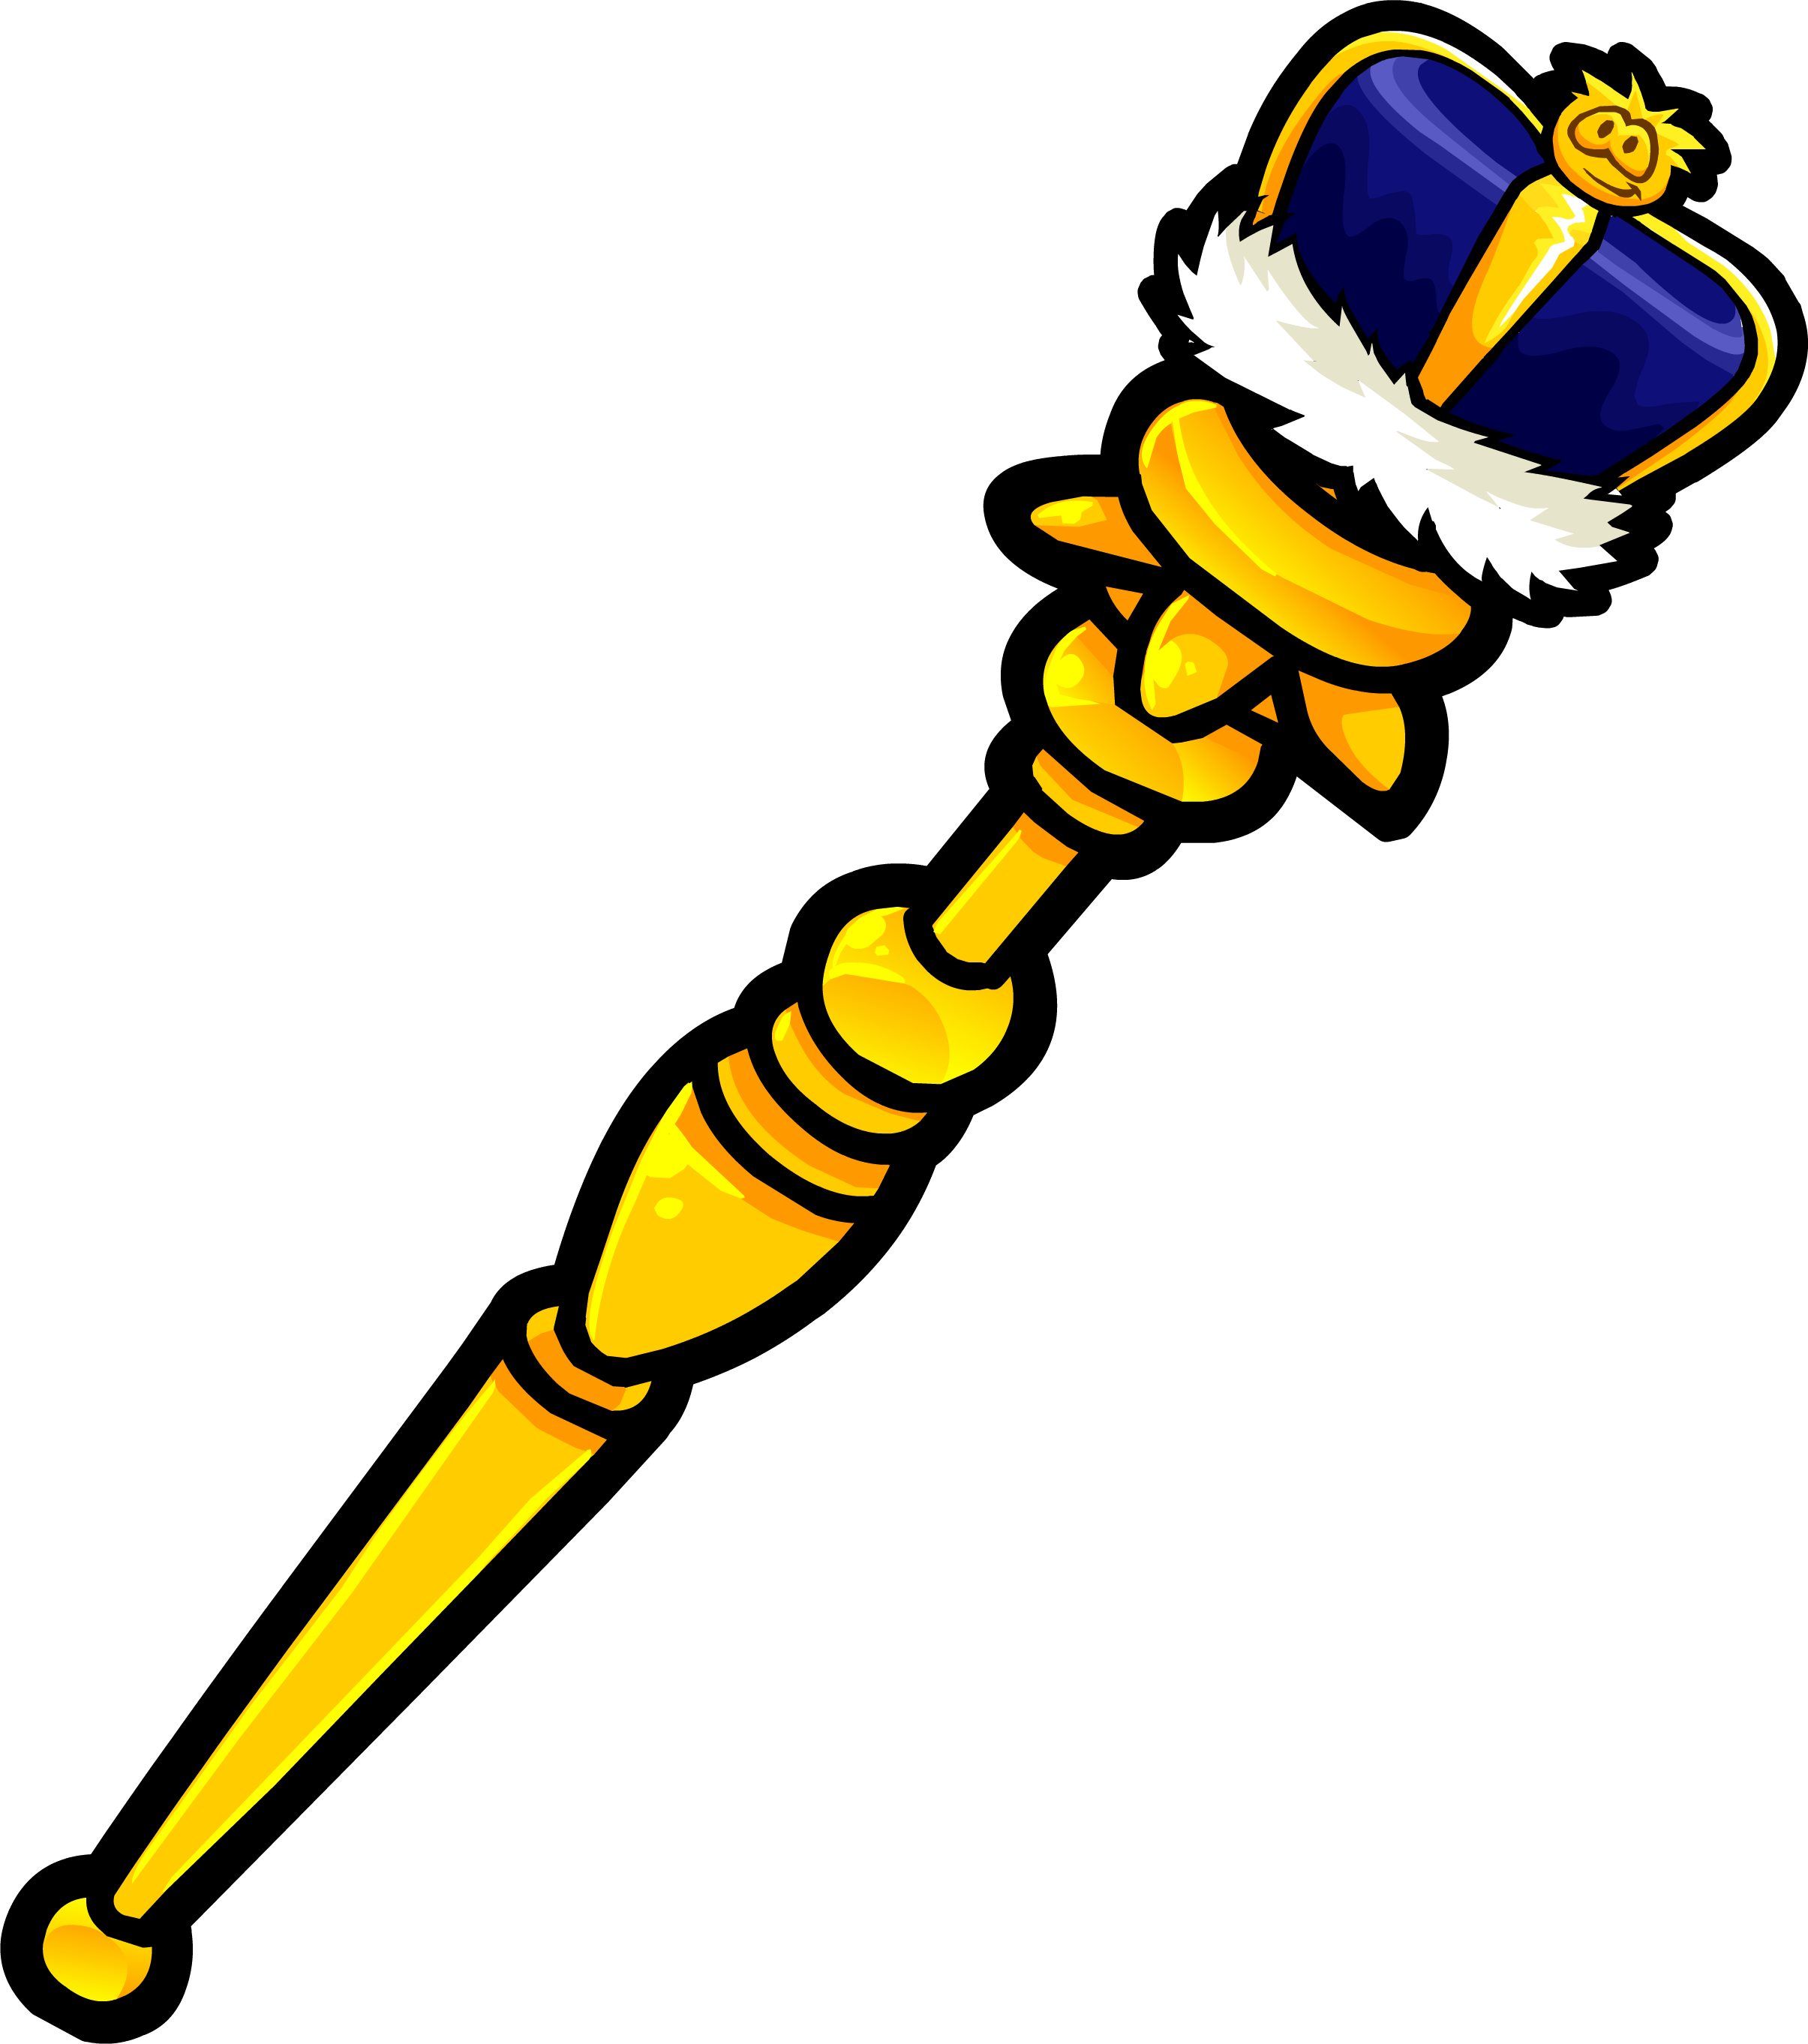 Crown scepter